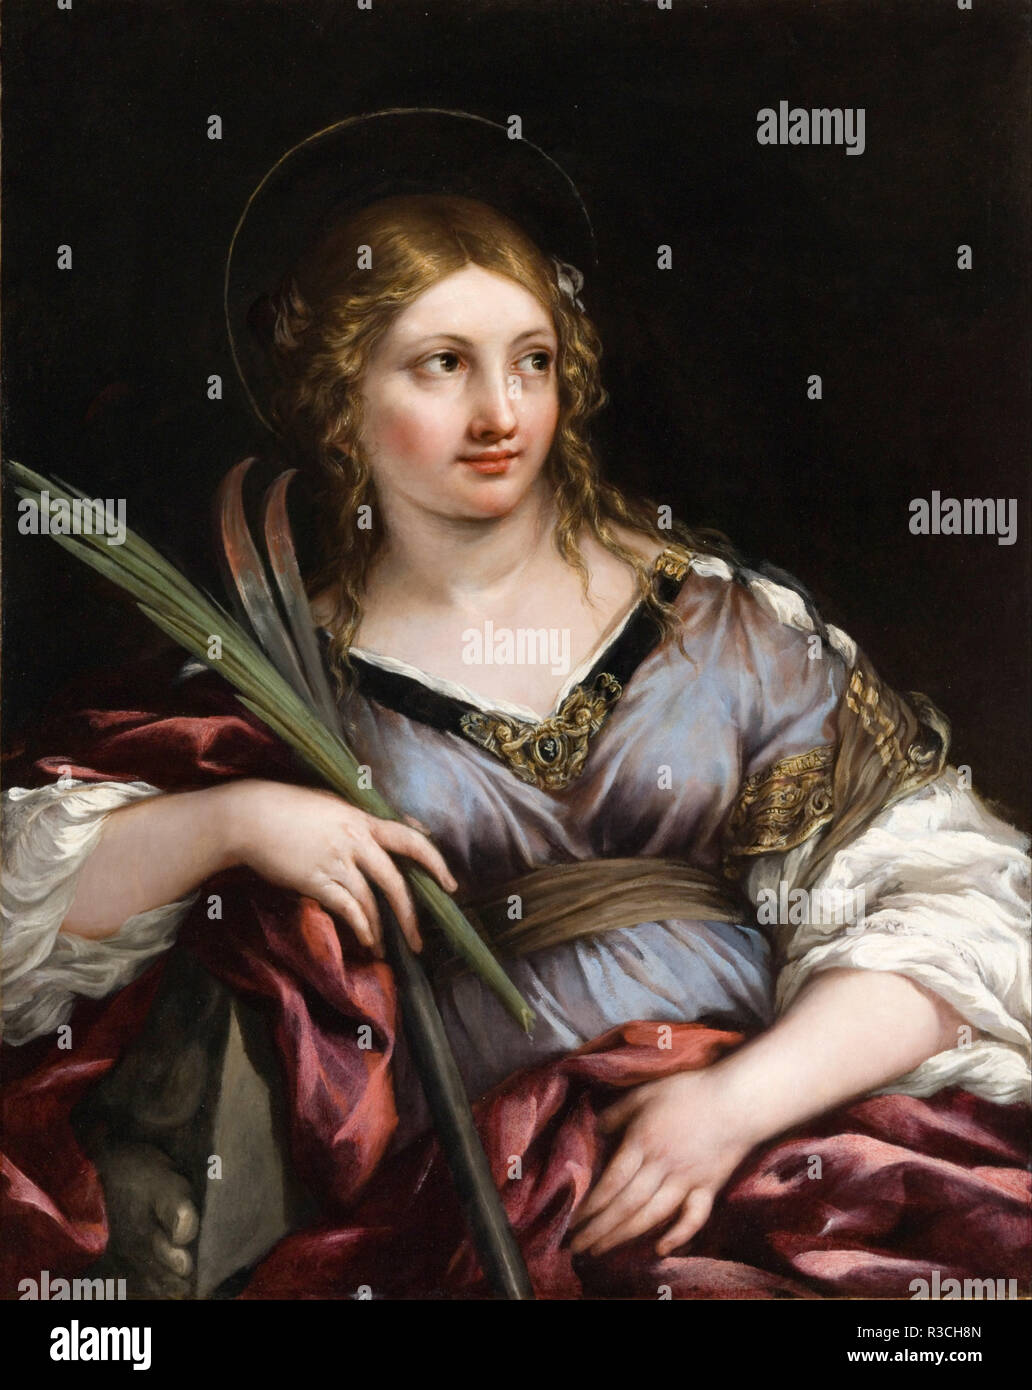 St. Martina. Date/Period: Ca. 1635-1640. Painting. Oil on canvas. Height: 950 mm (37.40 in); Width: 762 mm (30 in). Author: Pietro da Cortona (Pietro Berrettini). Stock Photo